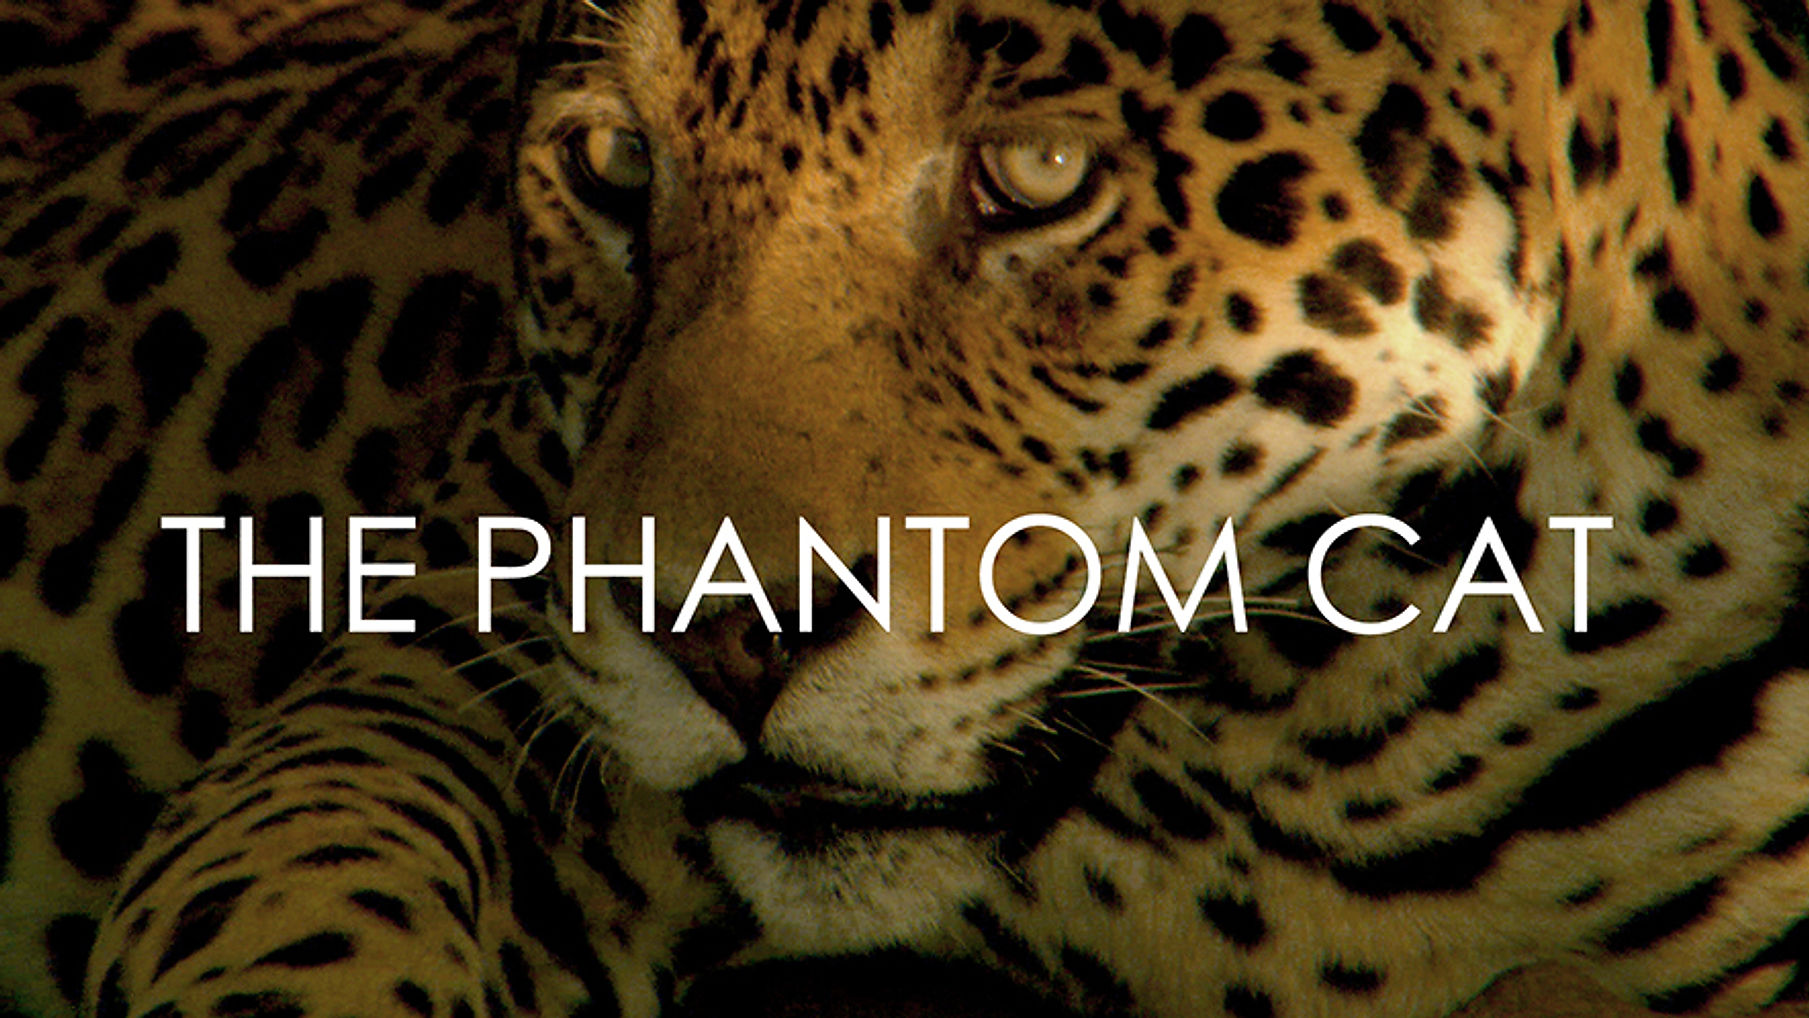 The Phantom Cat